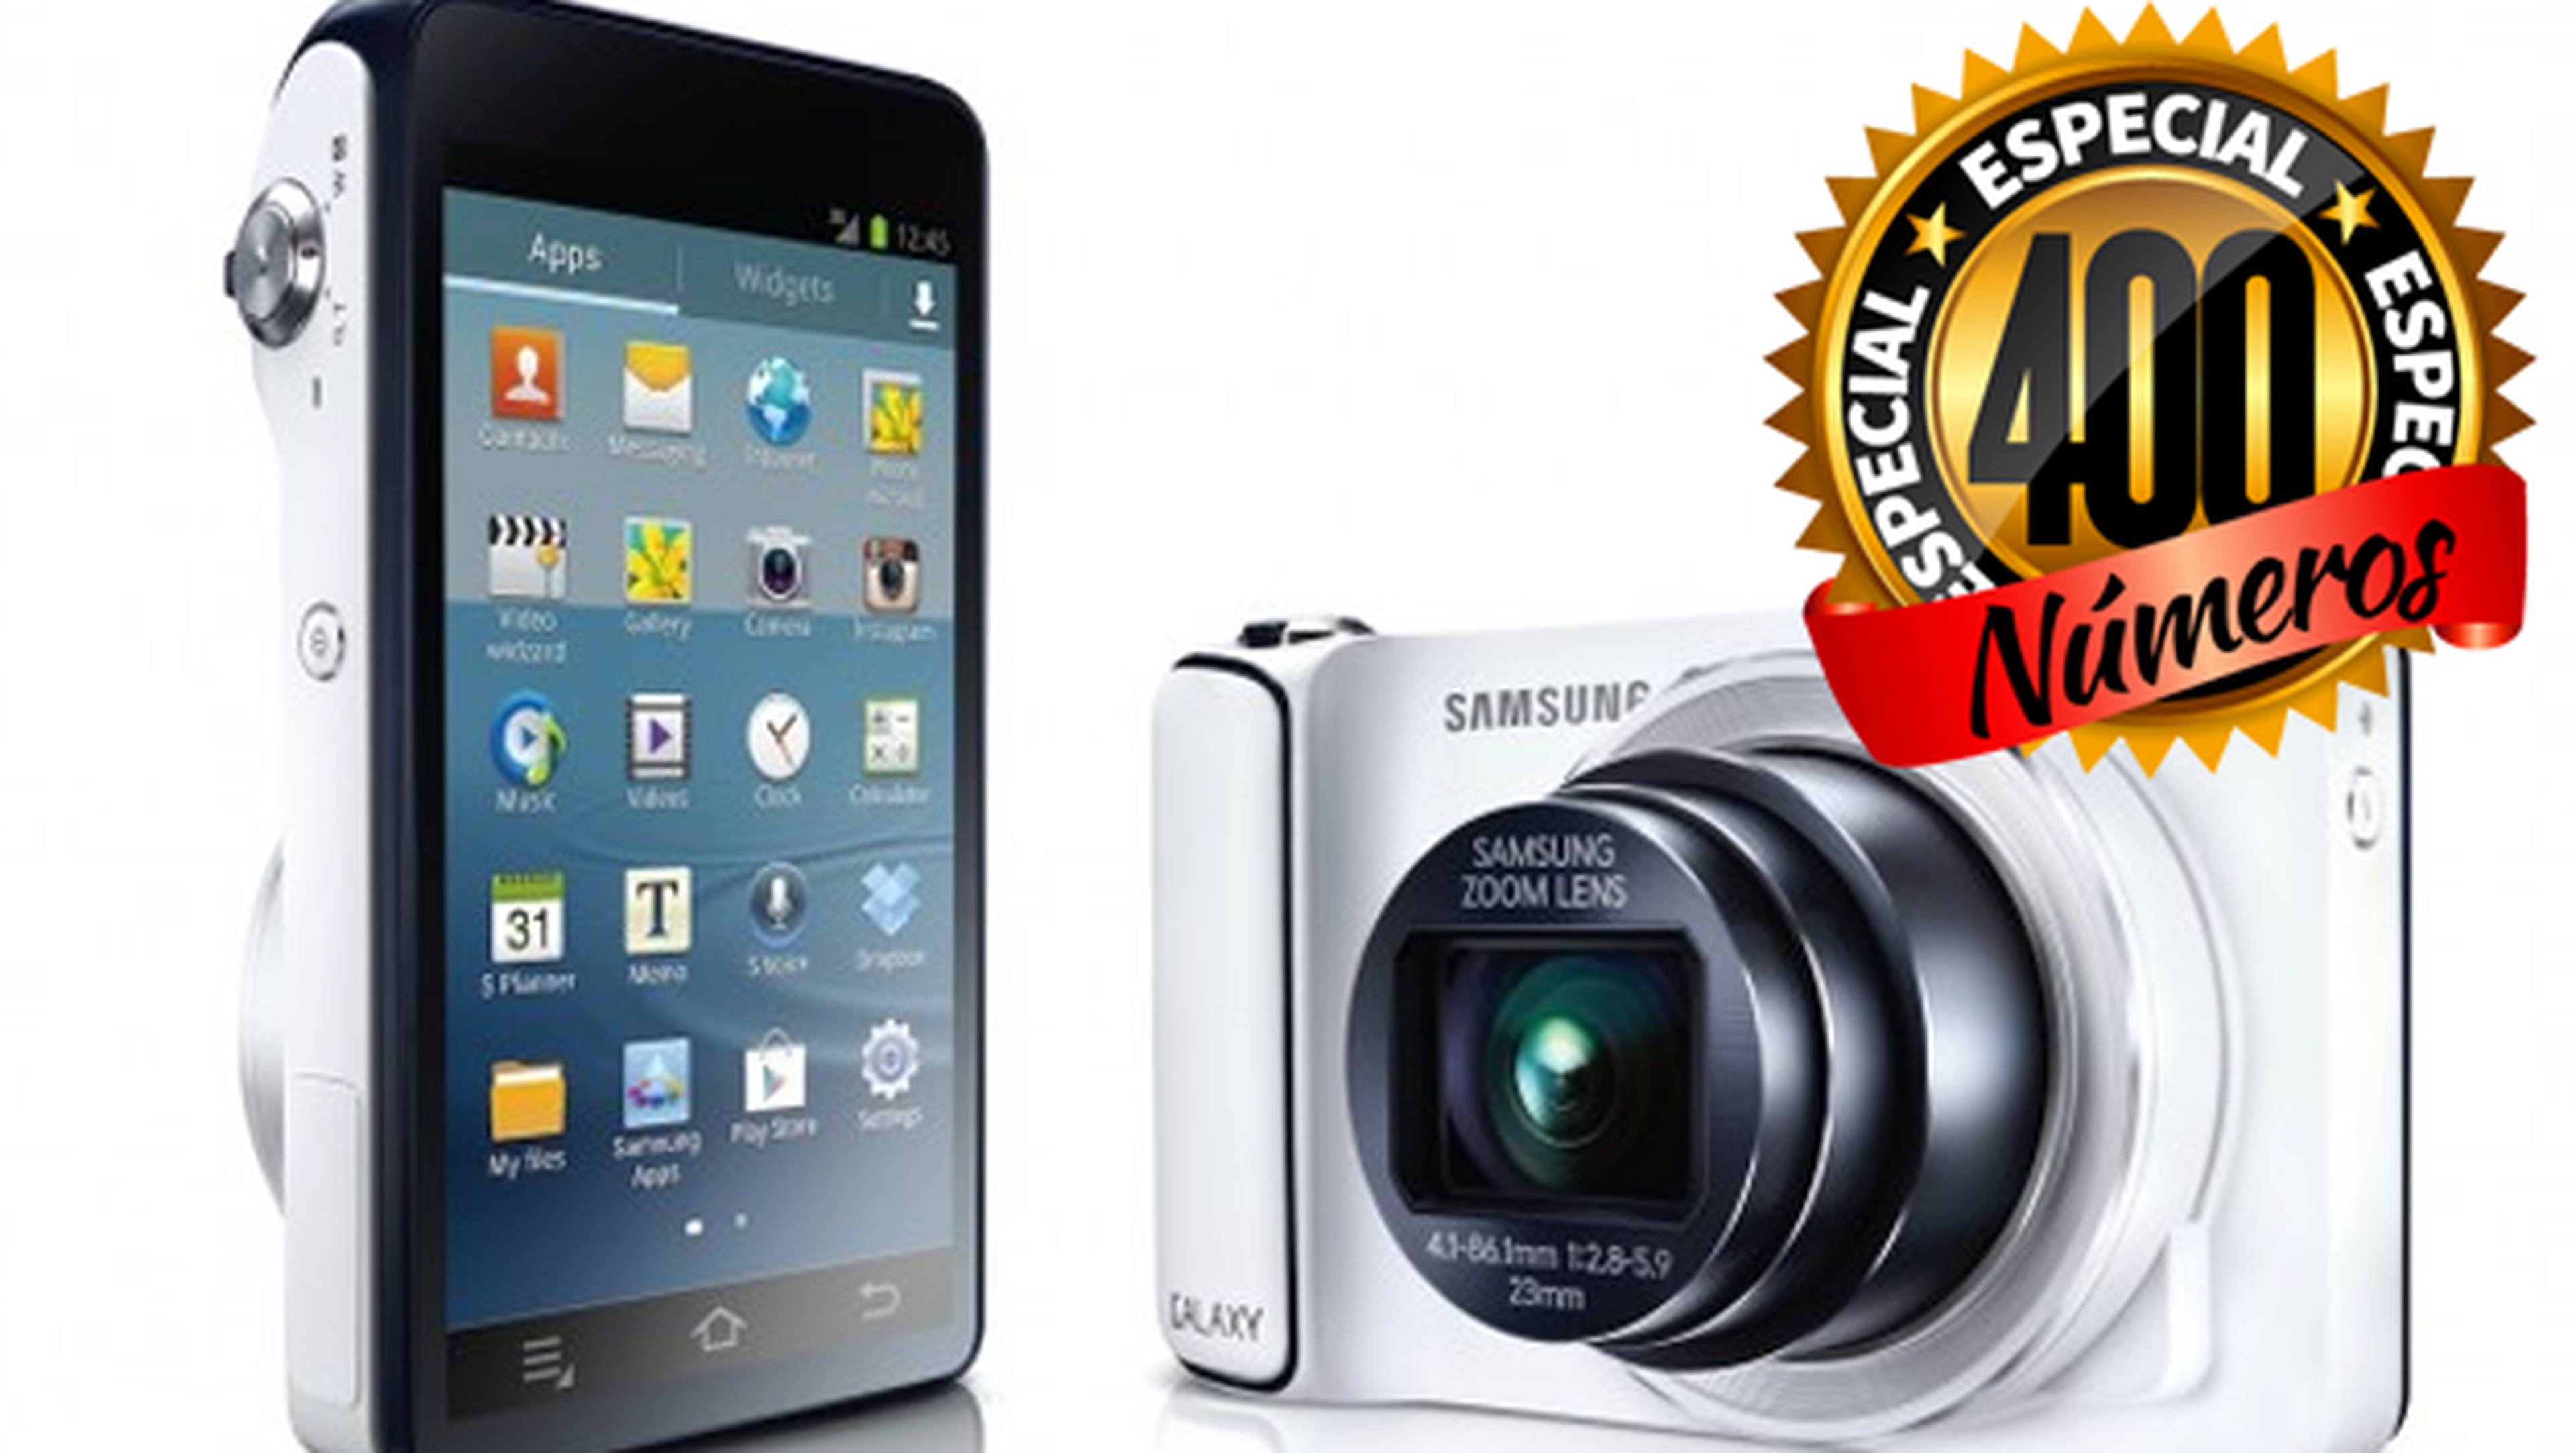 Samsung Galaxy Camera 3G sorteo número 400 Computer Hoy